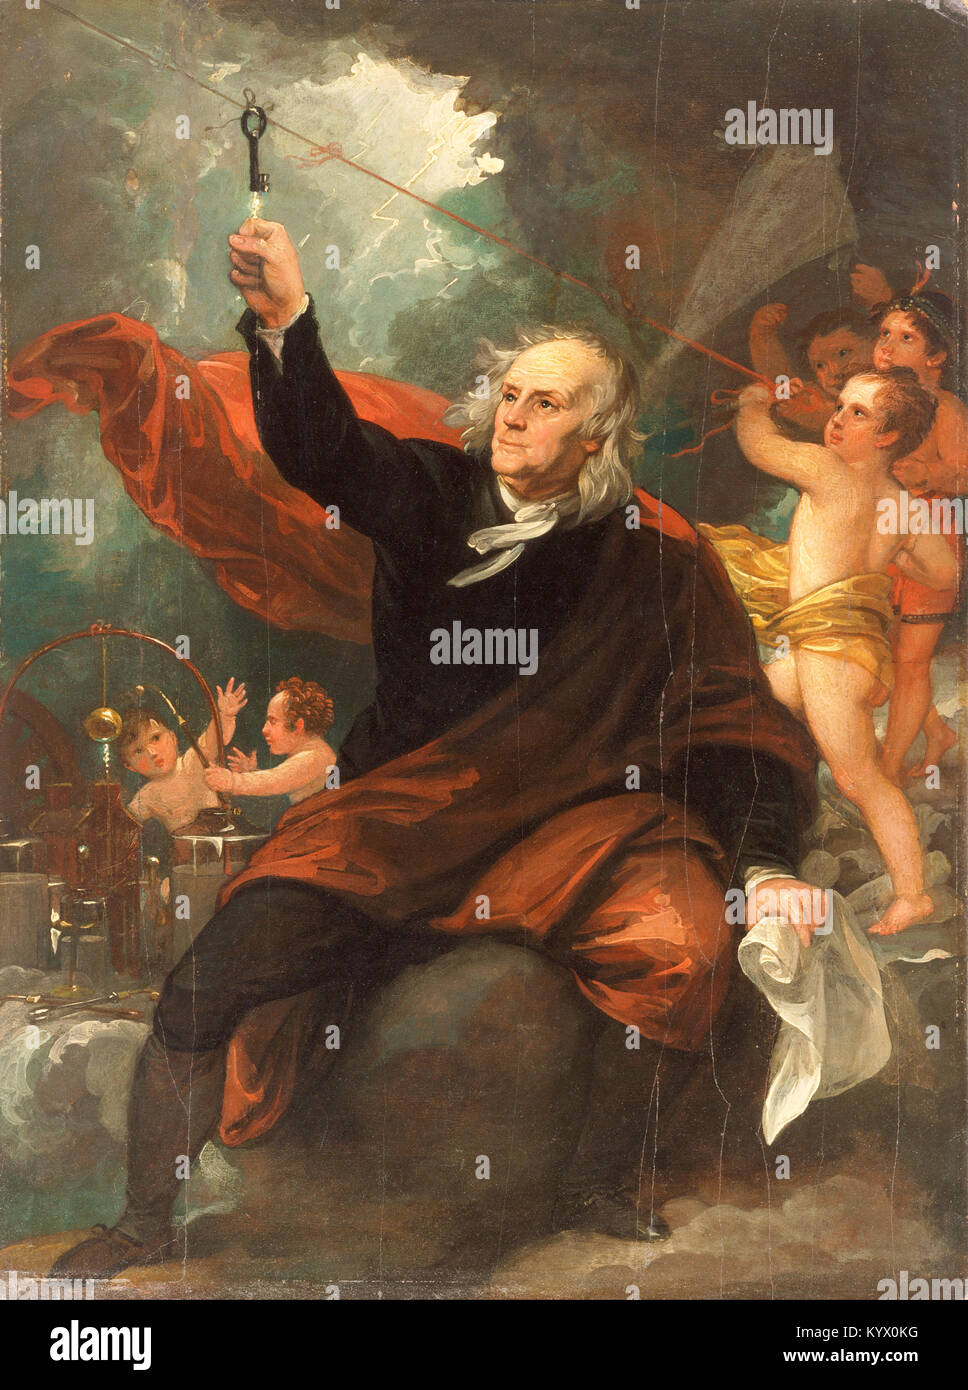 38,000 Benjamin Franklin Royalty-Free Images, Stock Photos